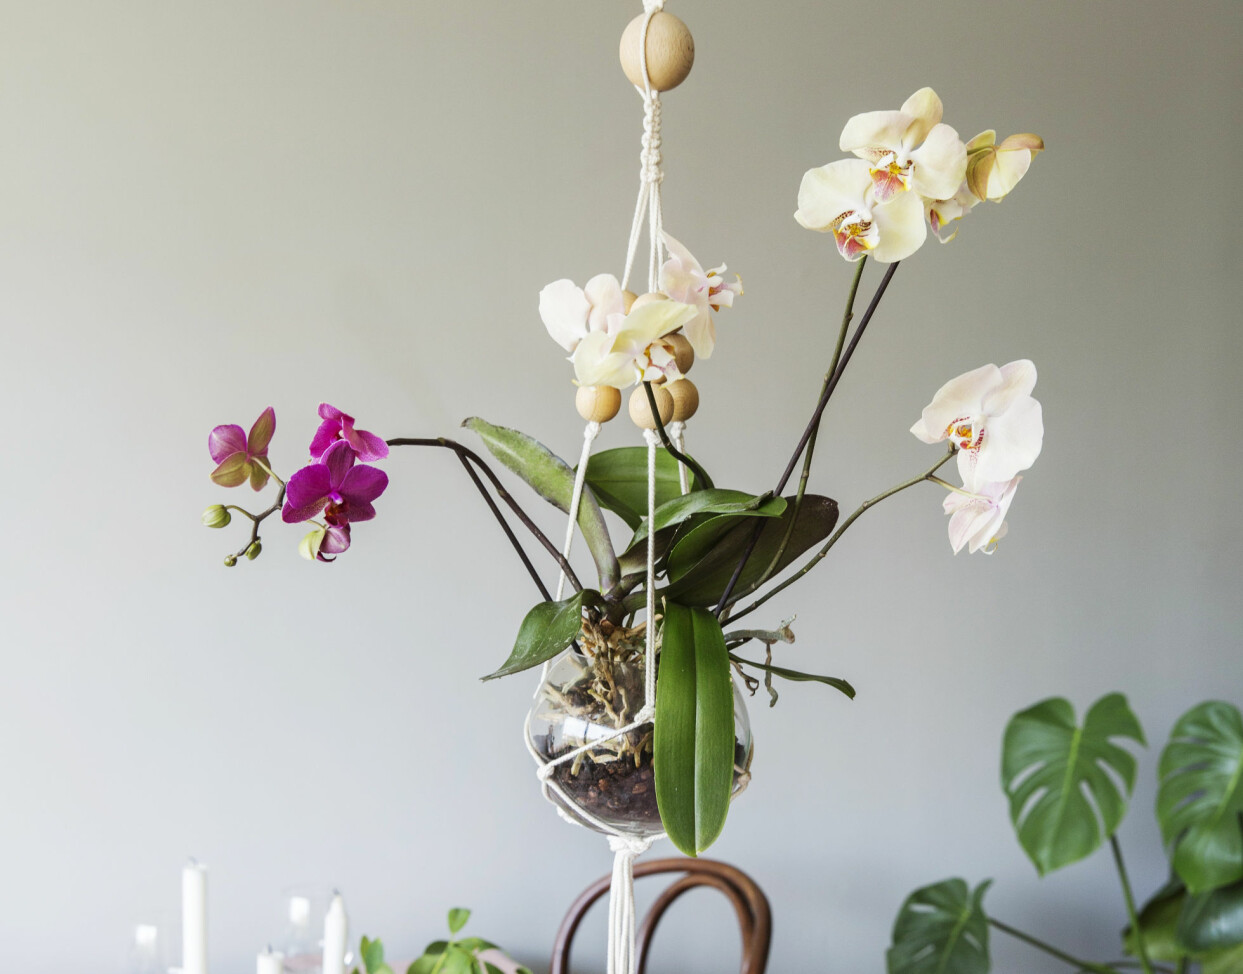 Arrangemang av orkidéer som svävar i luften.